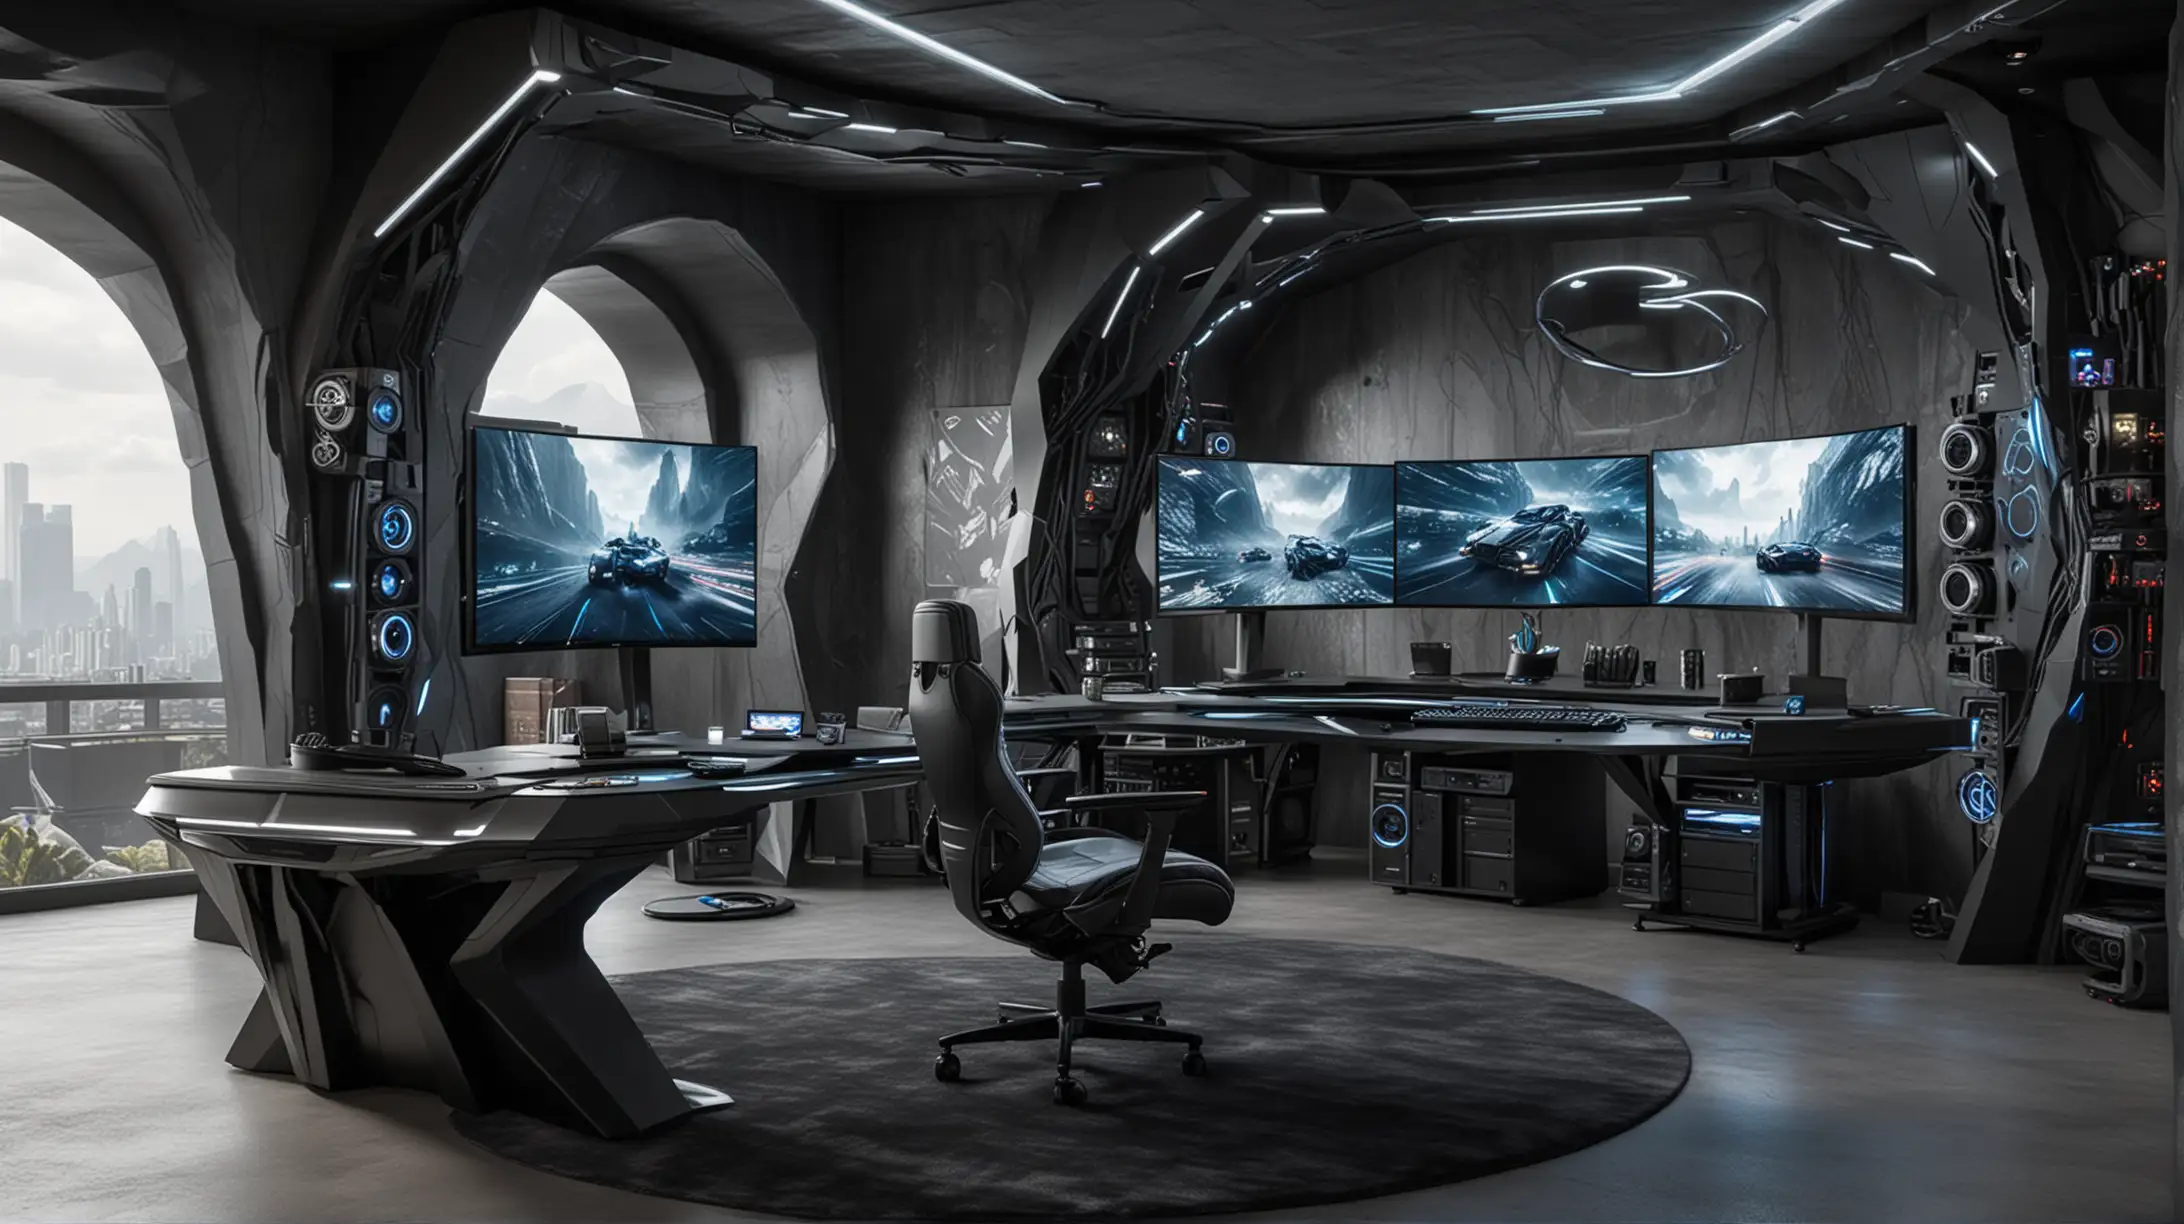 Futuristic BatcaveInspired SuperComputer Desk and TV Playroom Design